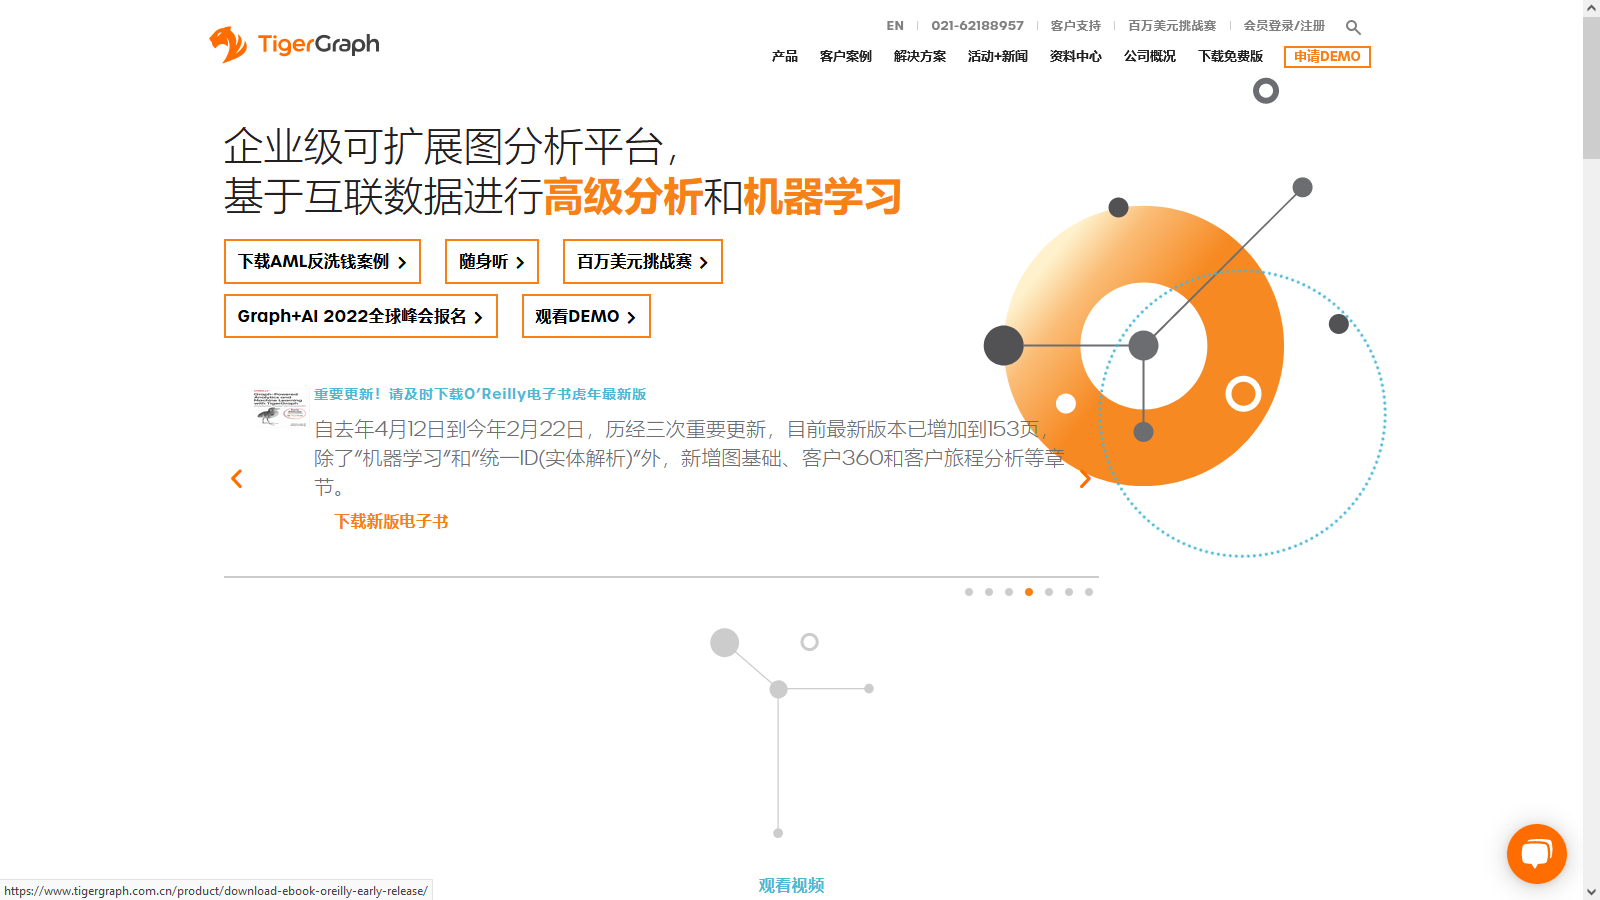 WordPress Website in Chinese Language